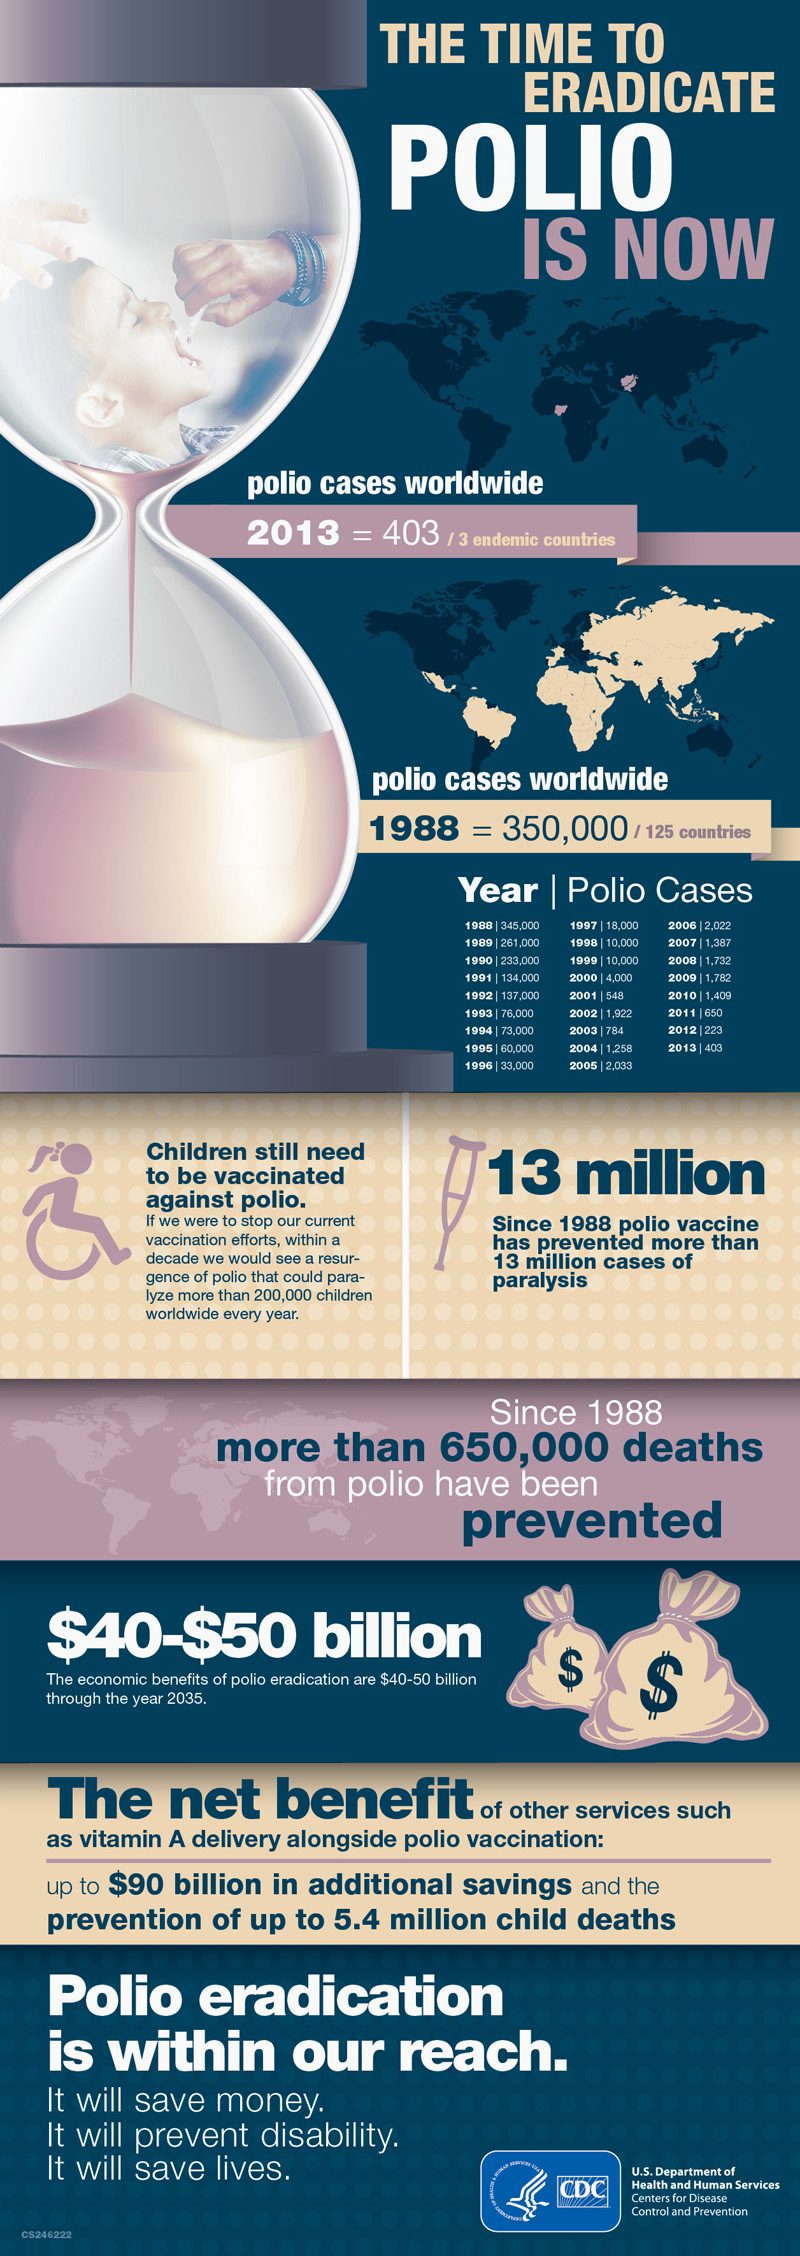 When Did Jonas Salk Invented the Polio Vaccine